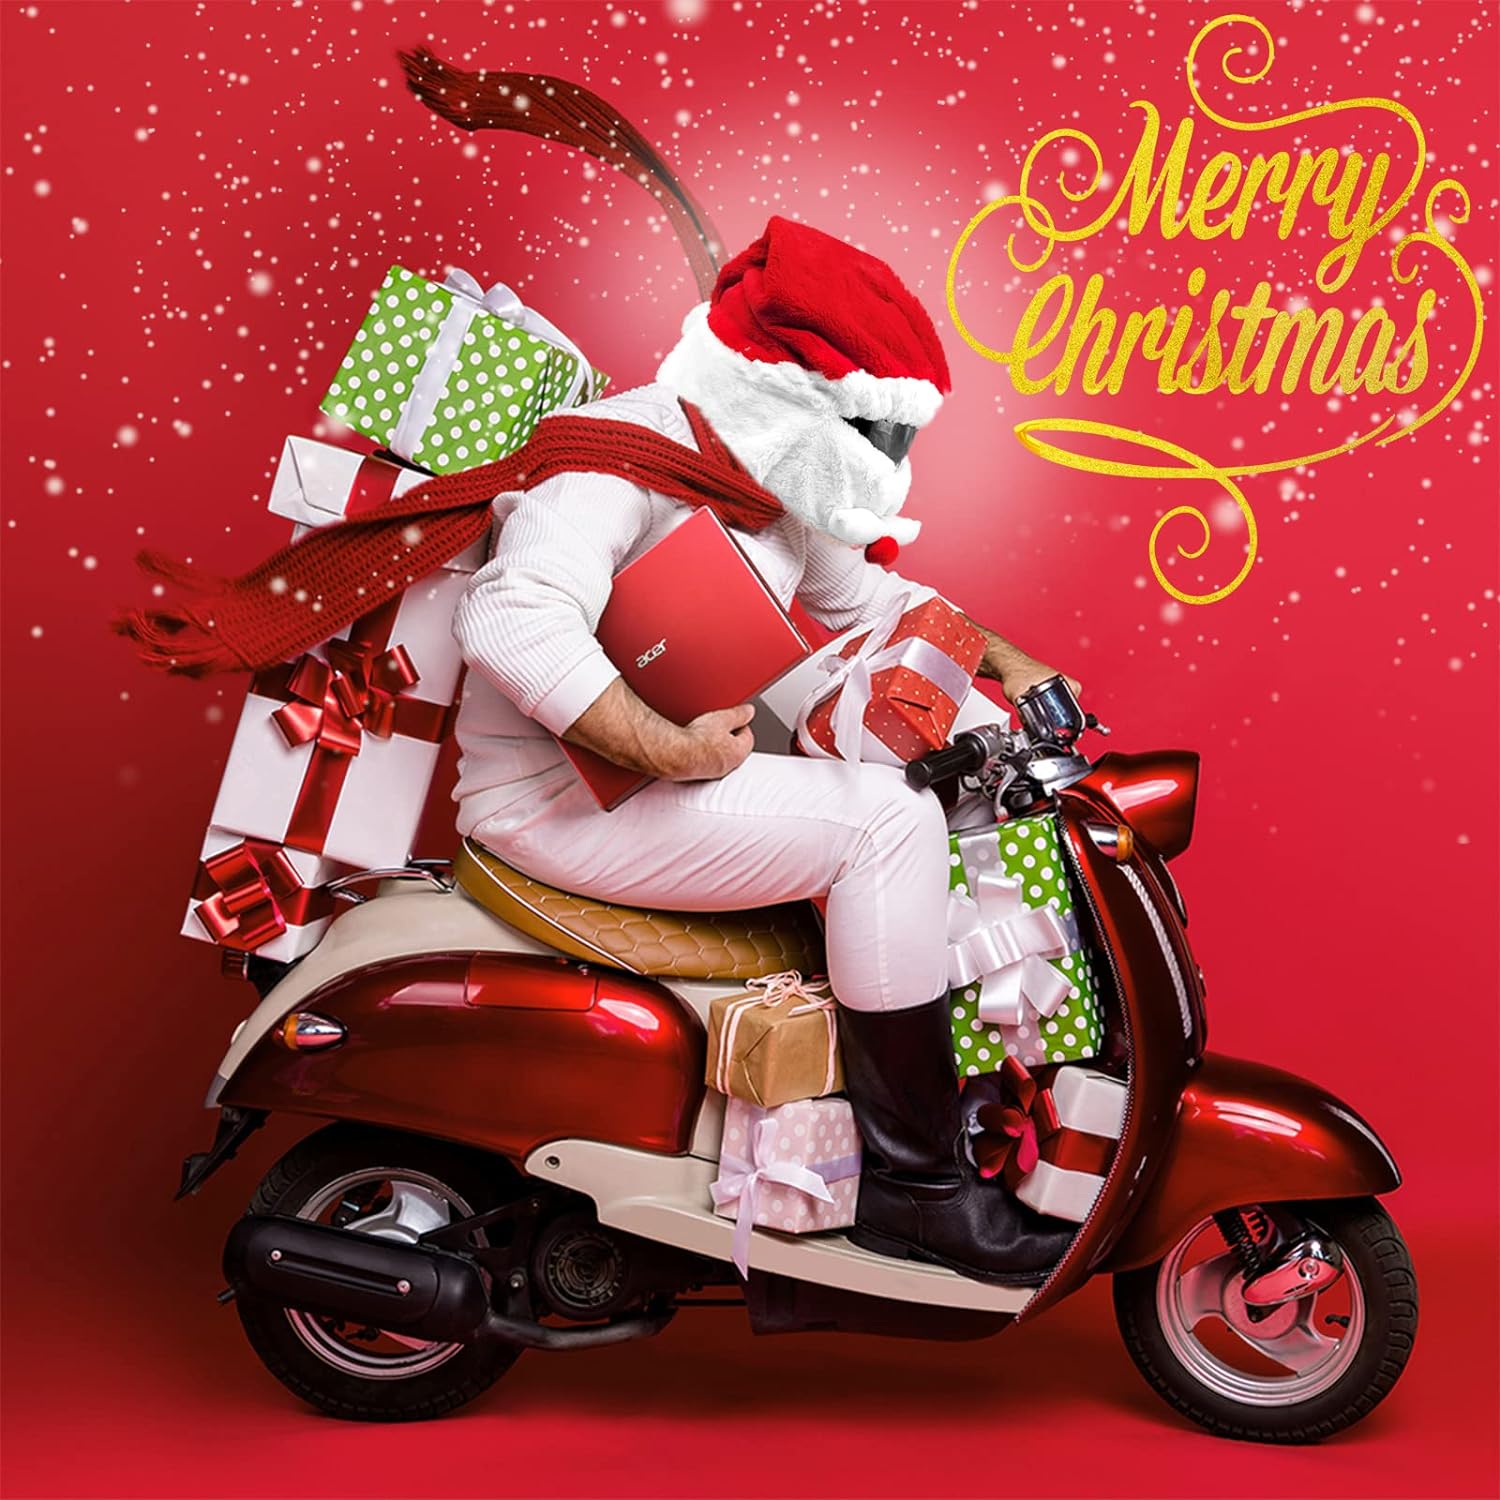 Christmas Santa Motorcycle Helmet Cover,Nativity Helmet Cover,Santa Claus Xmas Hat Decoration Accessories - Cykapu